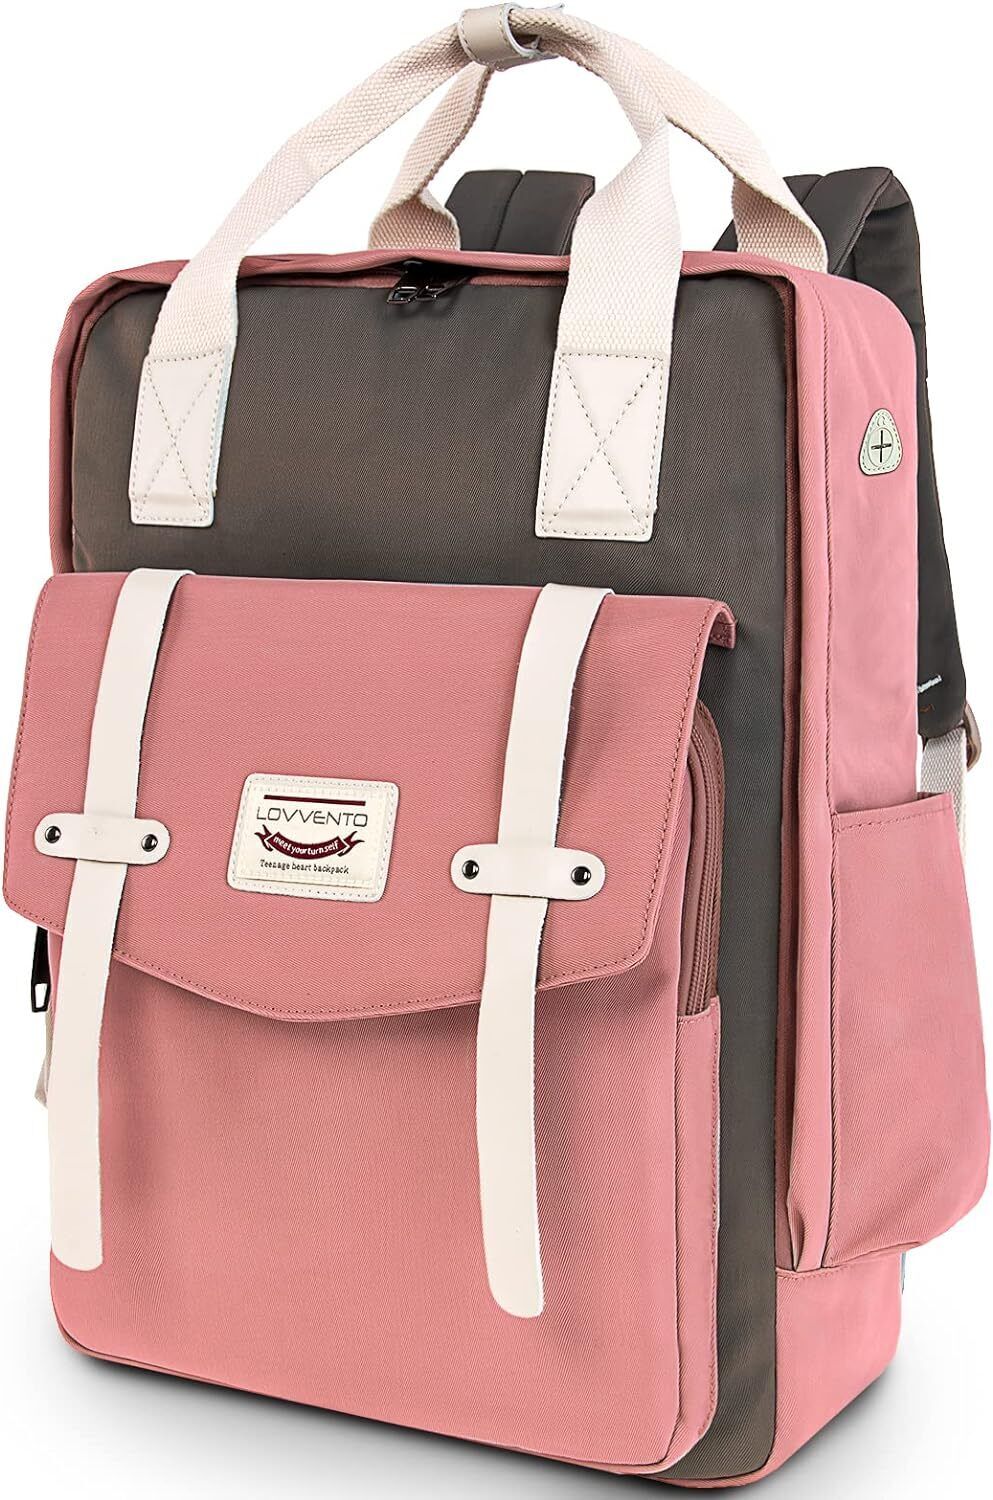 Lovvento 15.6 inch Laptop Japanese Backpack Travel Bag College 1-pink 